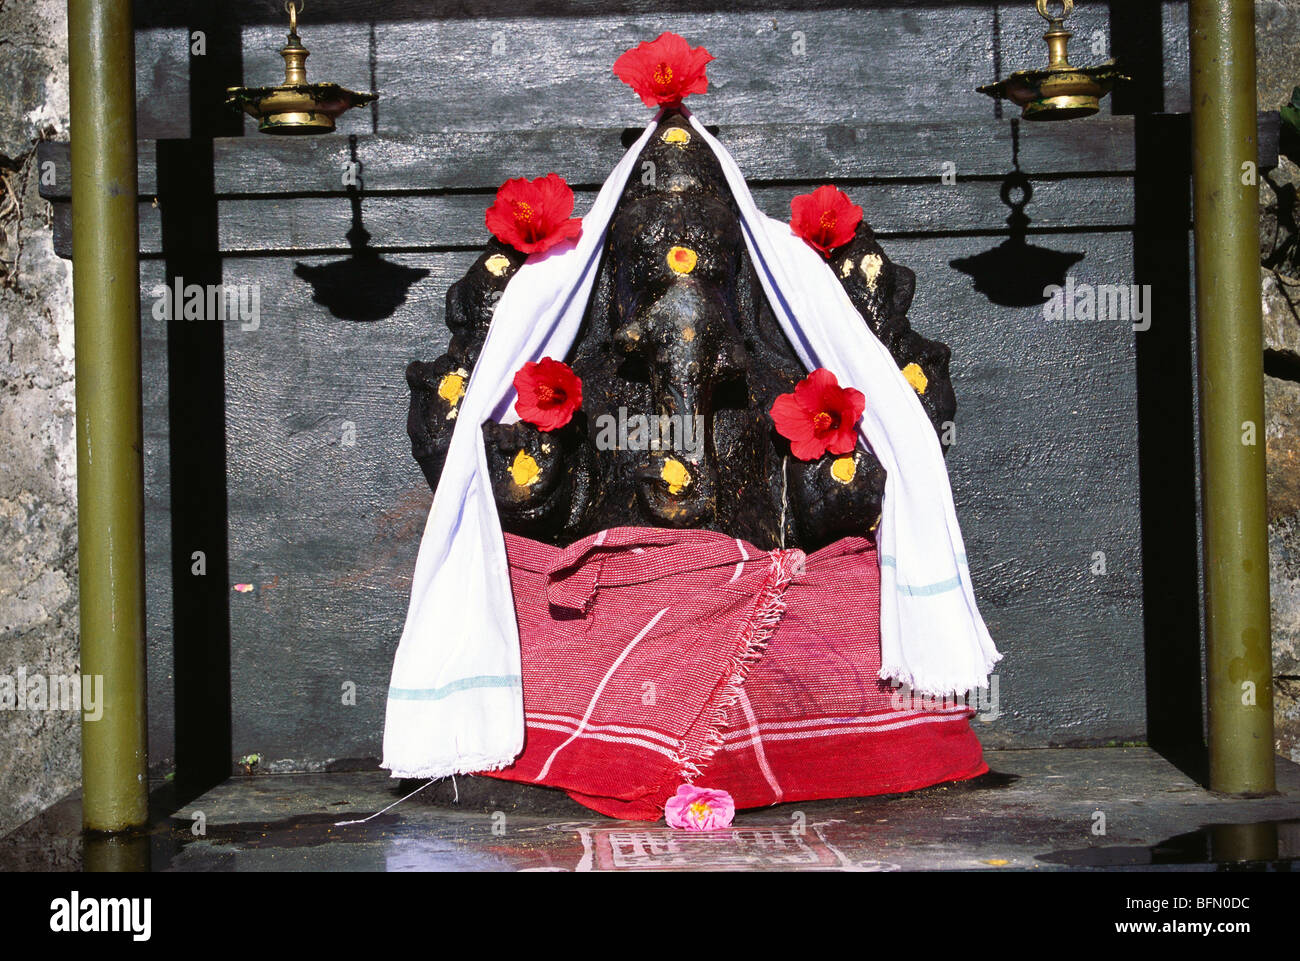 60957 RRJ : Shree Ganesh ganpati idole de tête d'éléphant ; Dieu Kodaikanal ; Tamil Nadu Inde ; Banque D'Images